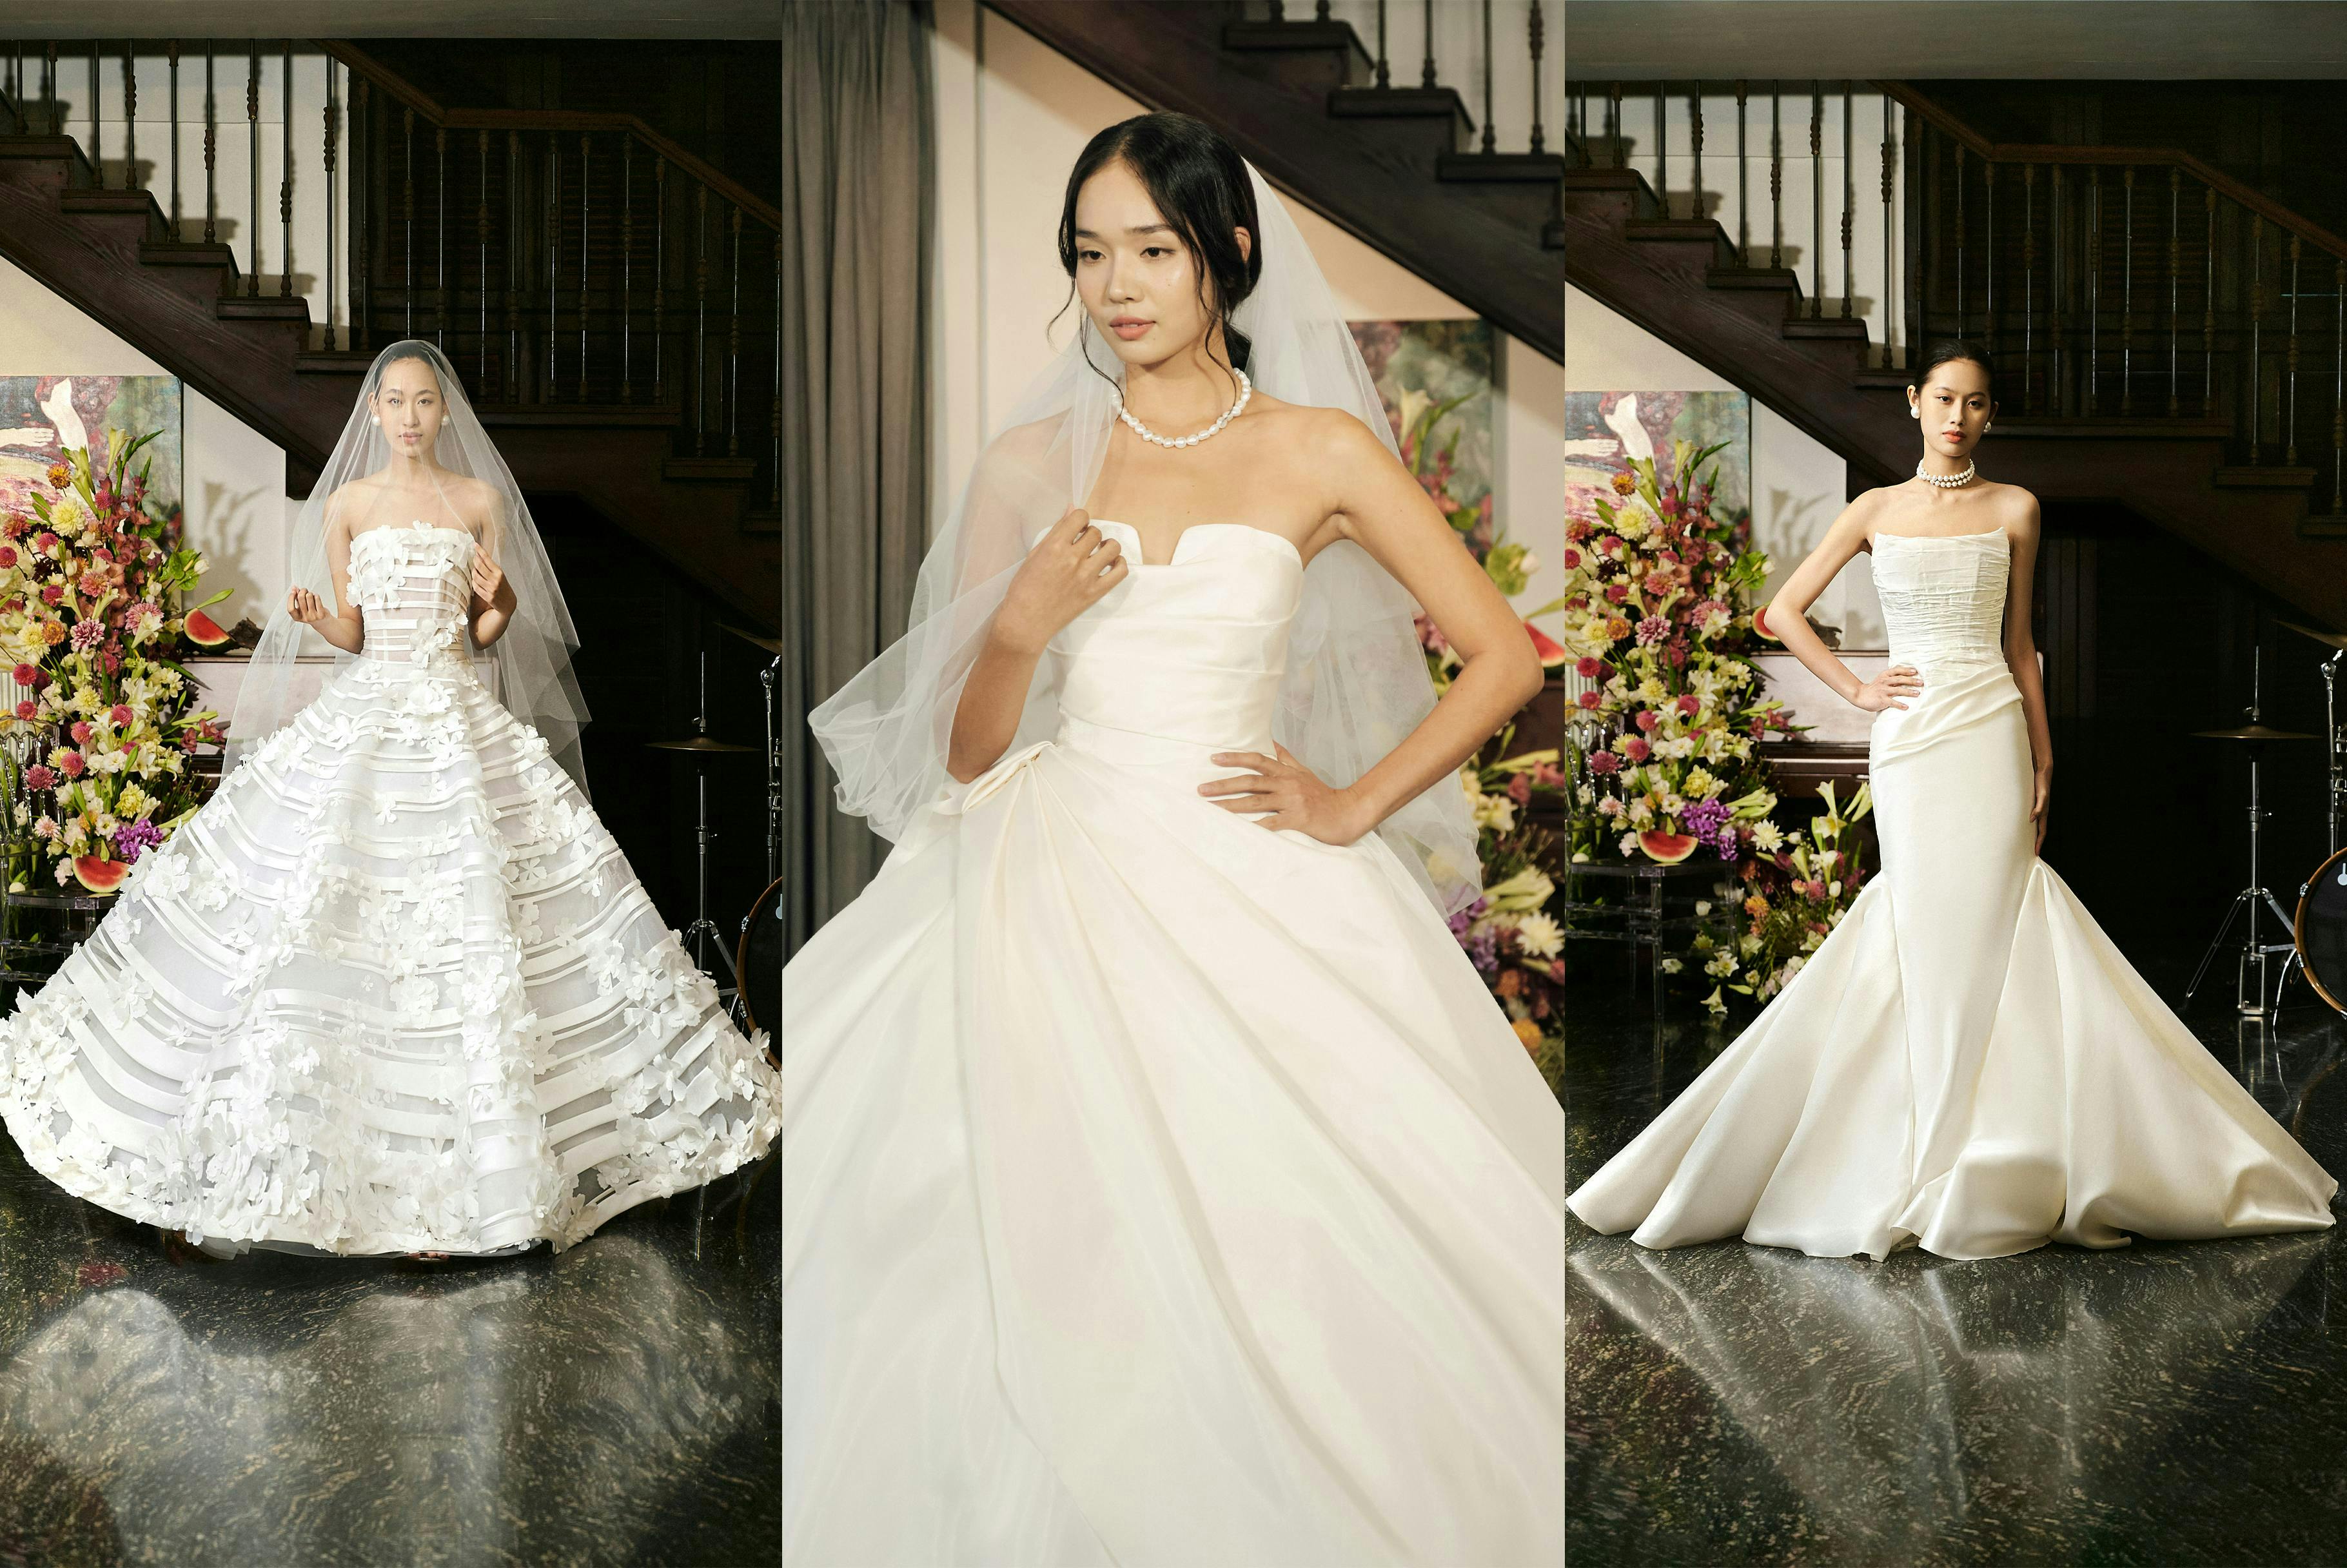 dress fashion formal wear gown wedding gown flower arrangement flower bouquet bride person woman